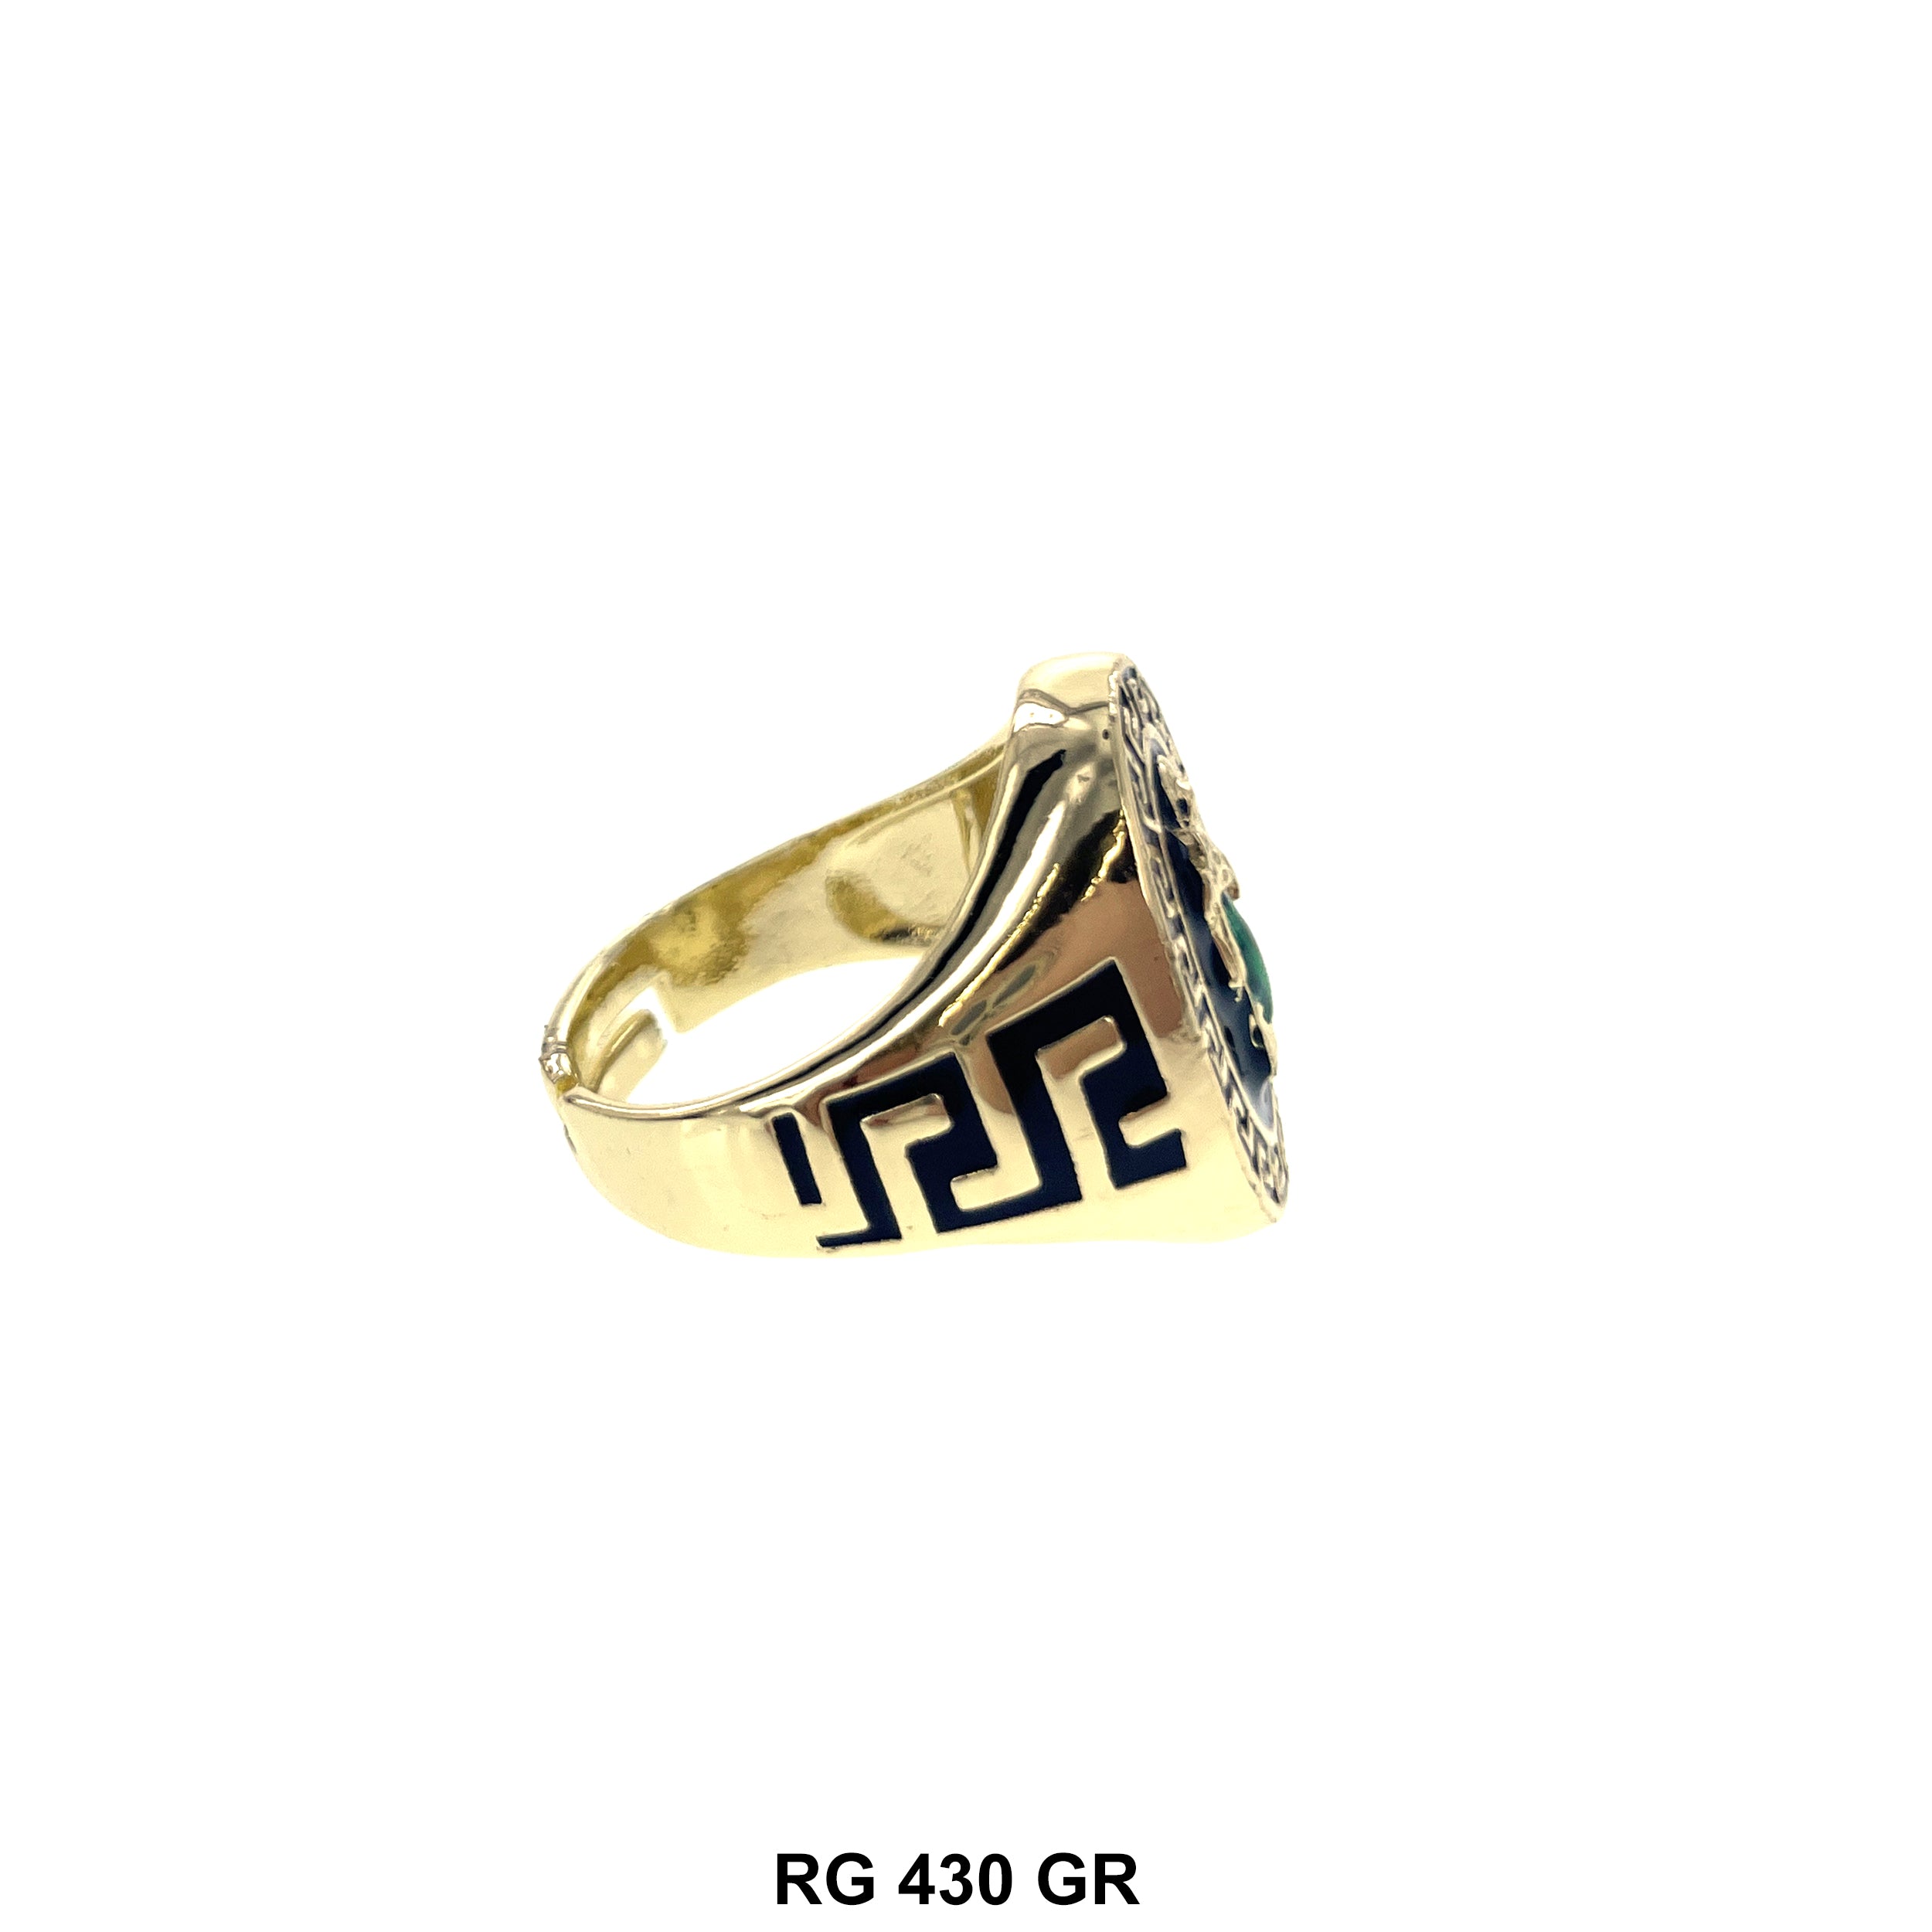 San Judas Adjustable Ring RG 430 GR